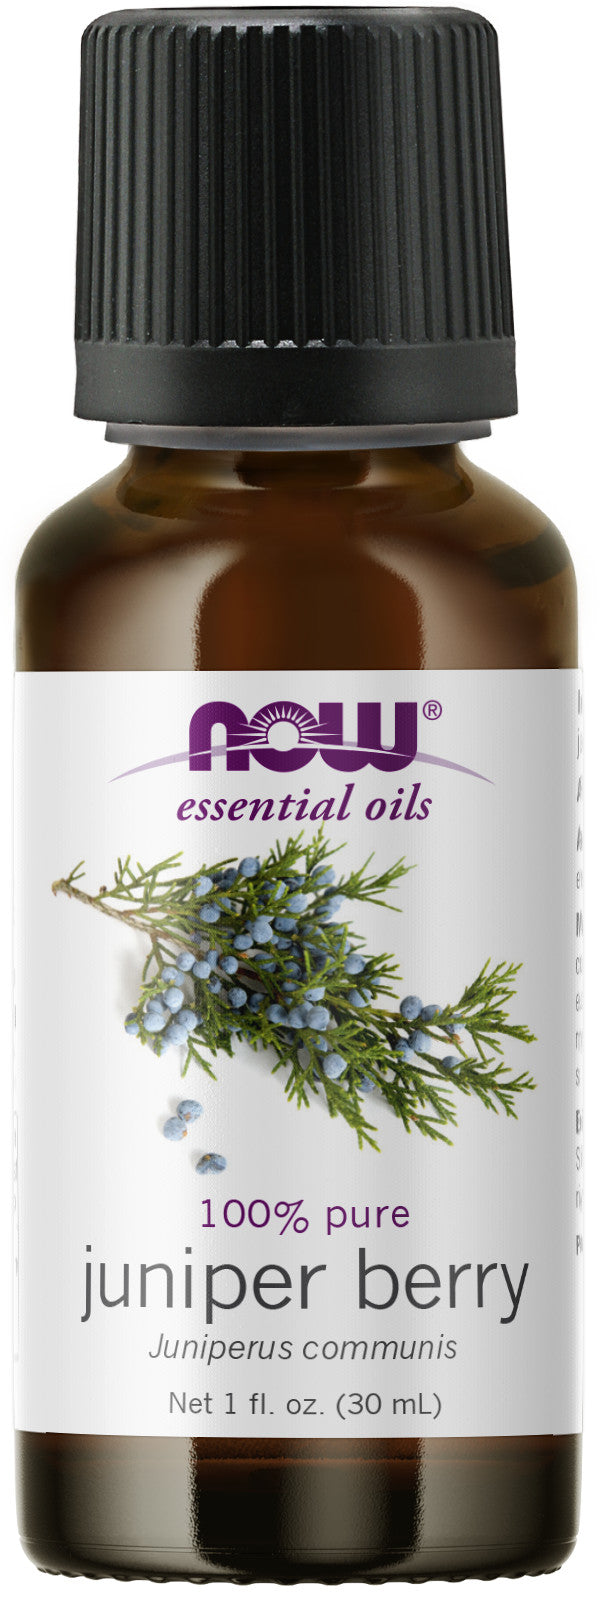 NOW Essential Oils, Juniper Berry Oil, Restoring Aromatherapy Scent, Steam Distilled, 100% Pure, Vegan, Child Resistant Cap, 1-Ounce